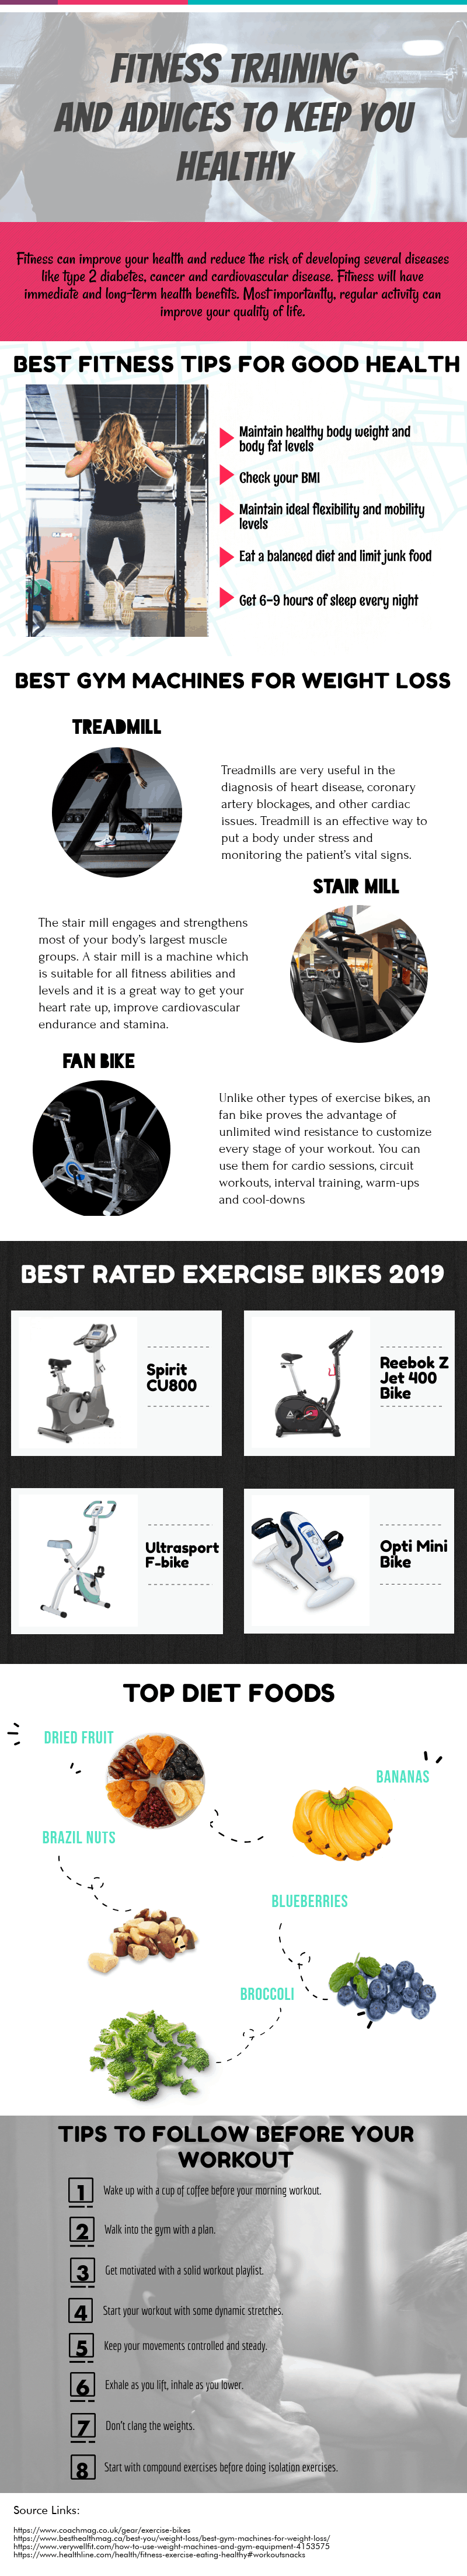 Benefits Of A Horizontal Exercise Bike